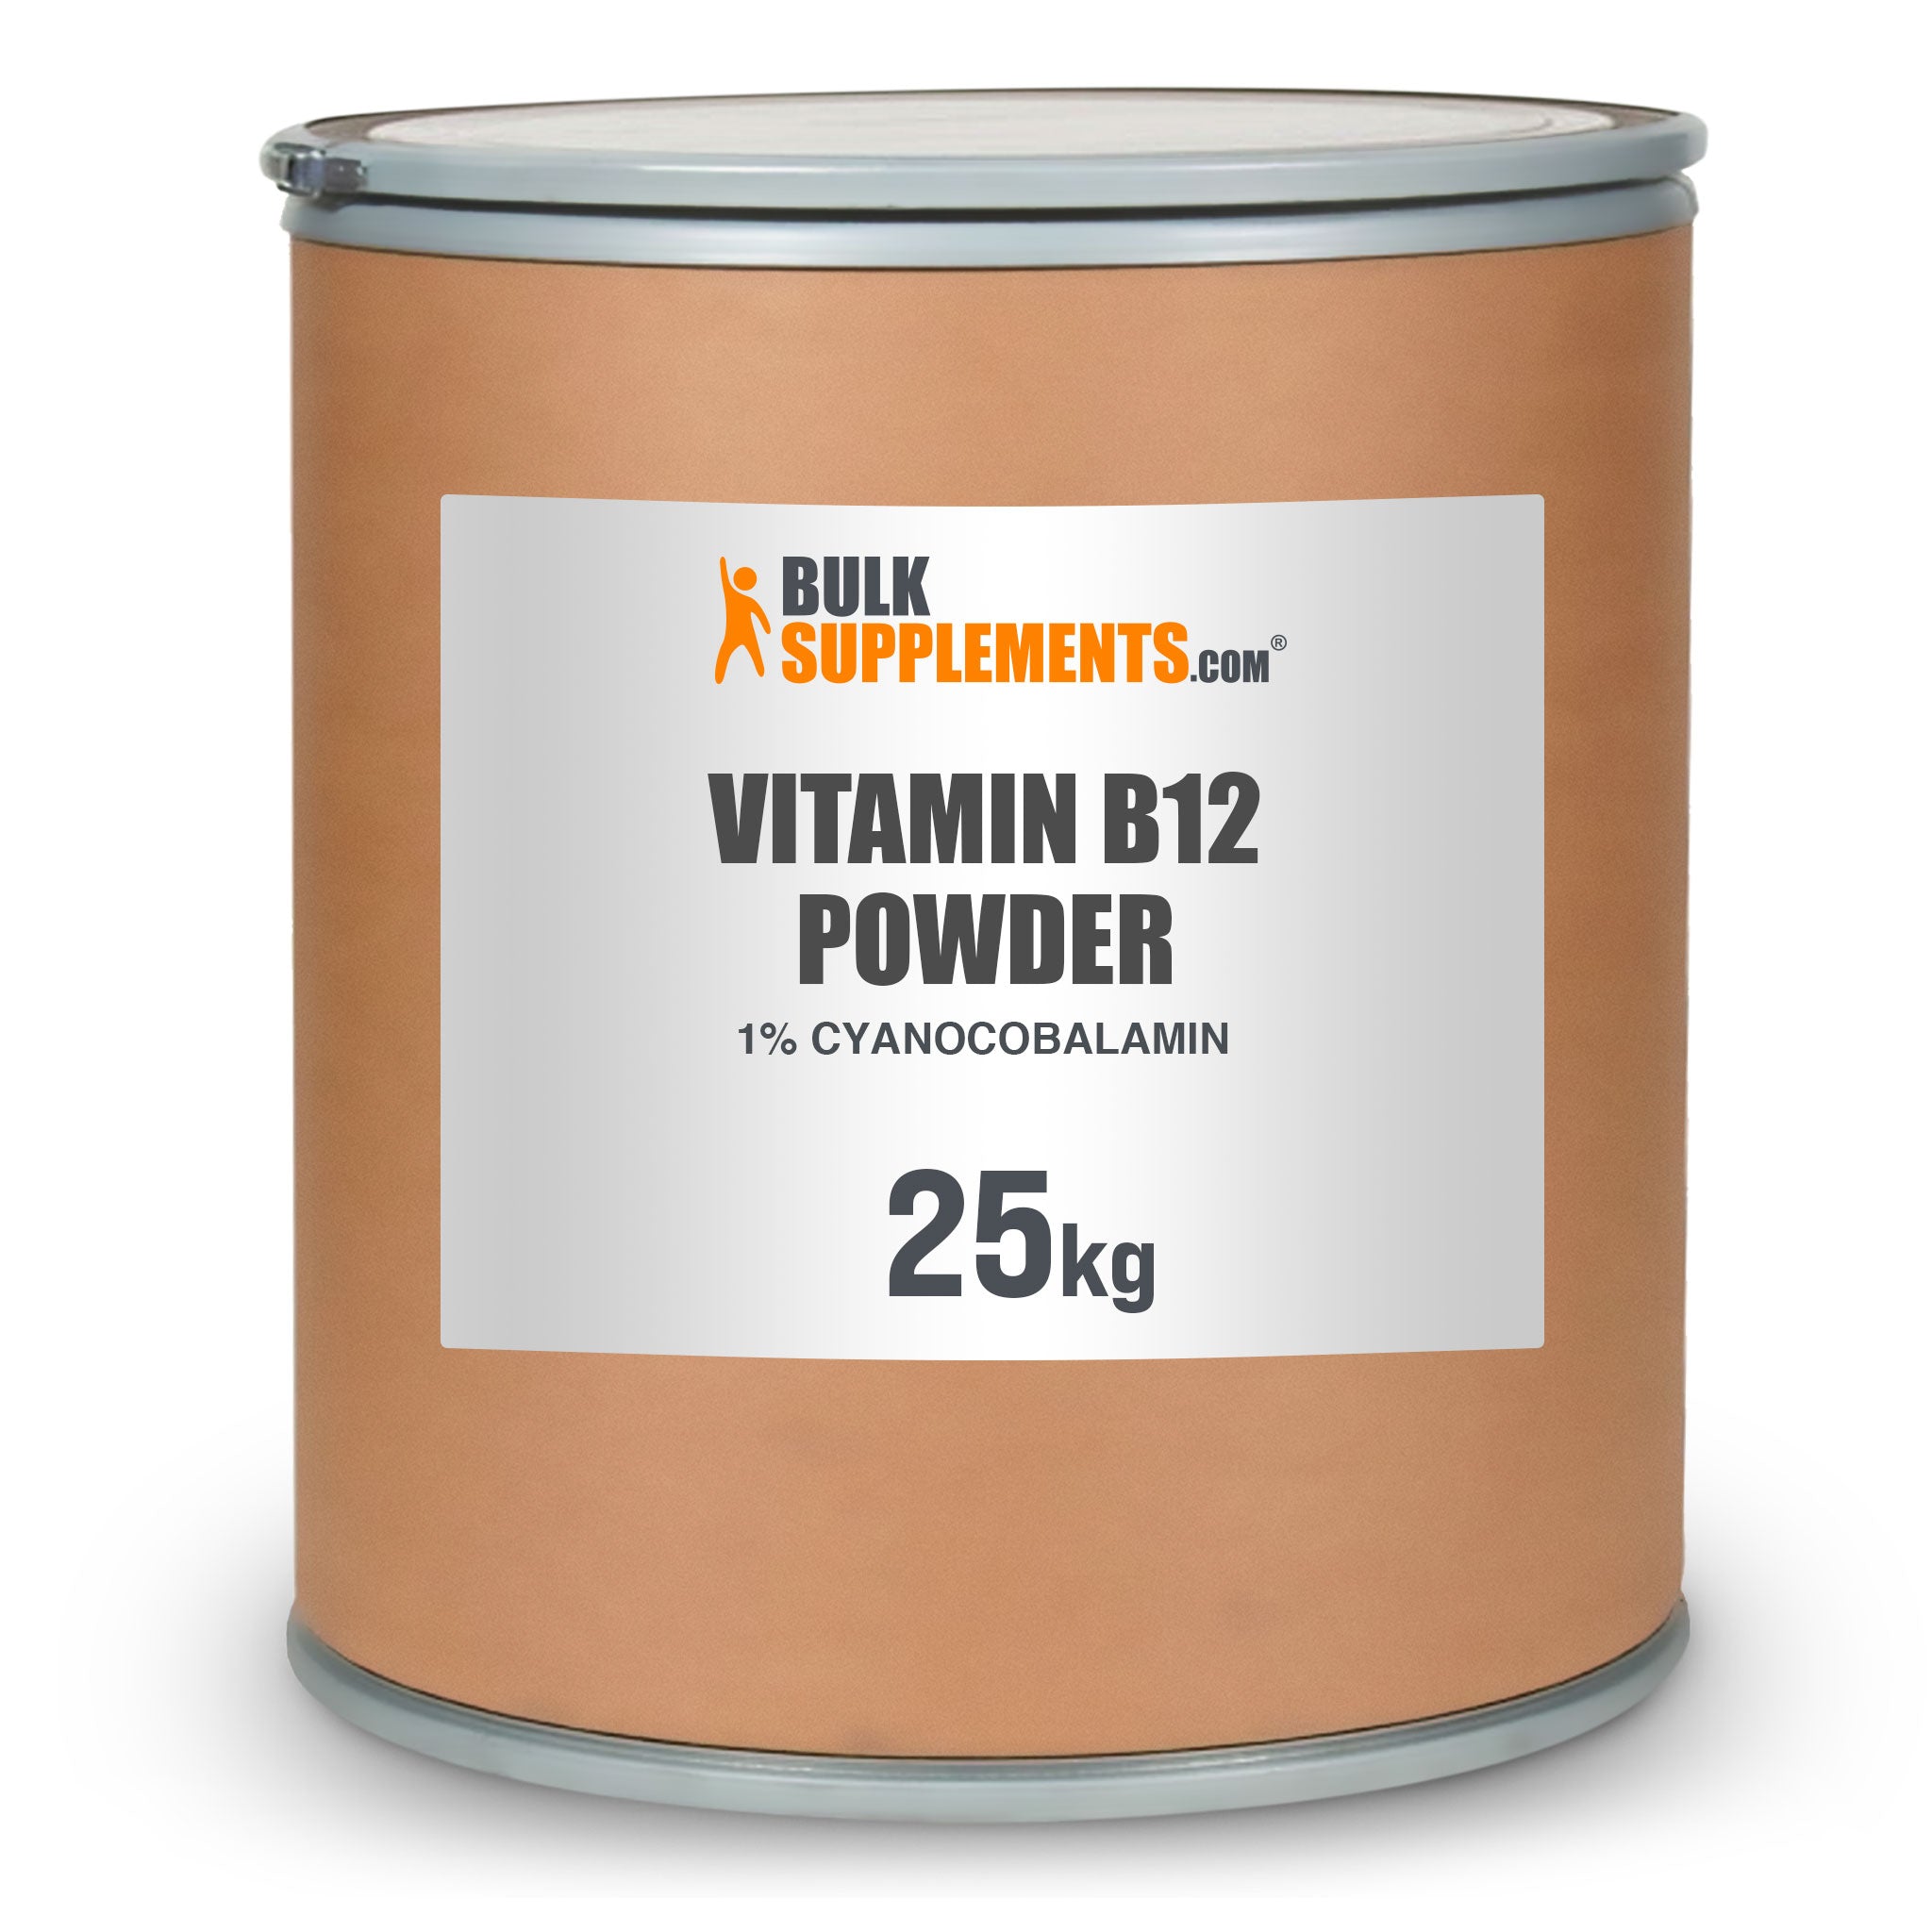 BulkSupplements Vitamin B12 Powder 1% Cyanocobalamin 25kg drum